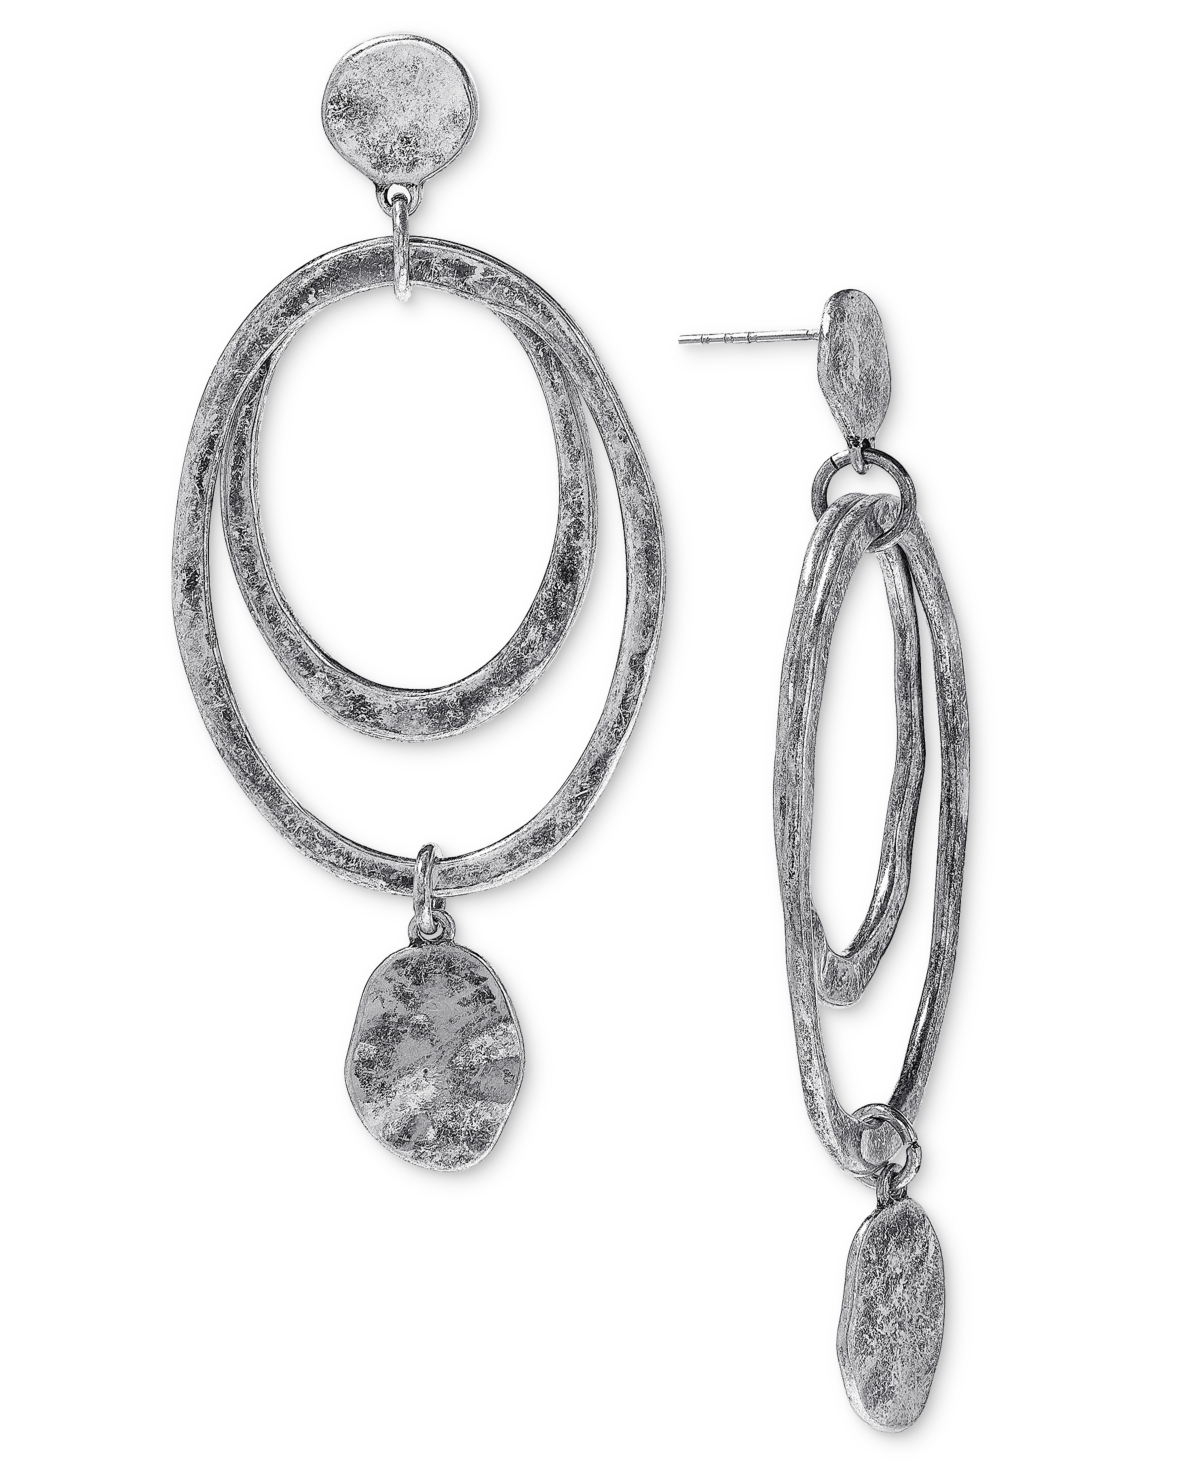 Oval Orbital Drop Statement Earrings, Created for Macy's - Silver